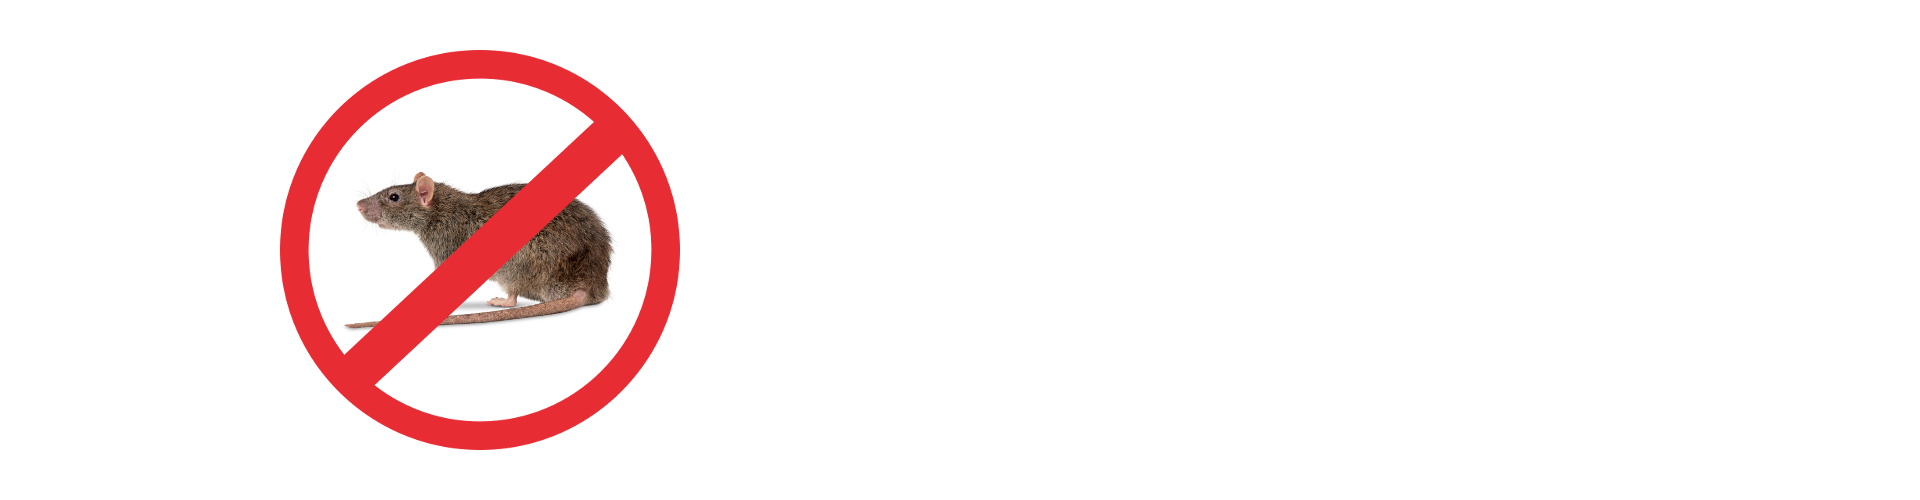 Deratyzacja - DDD